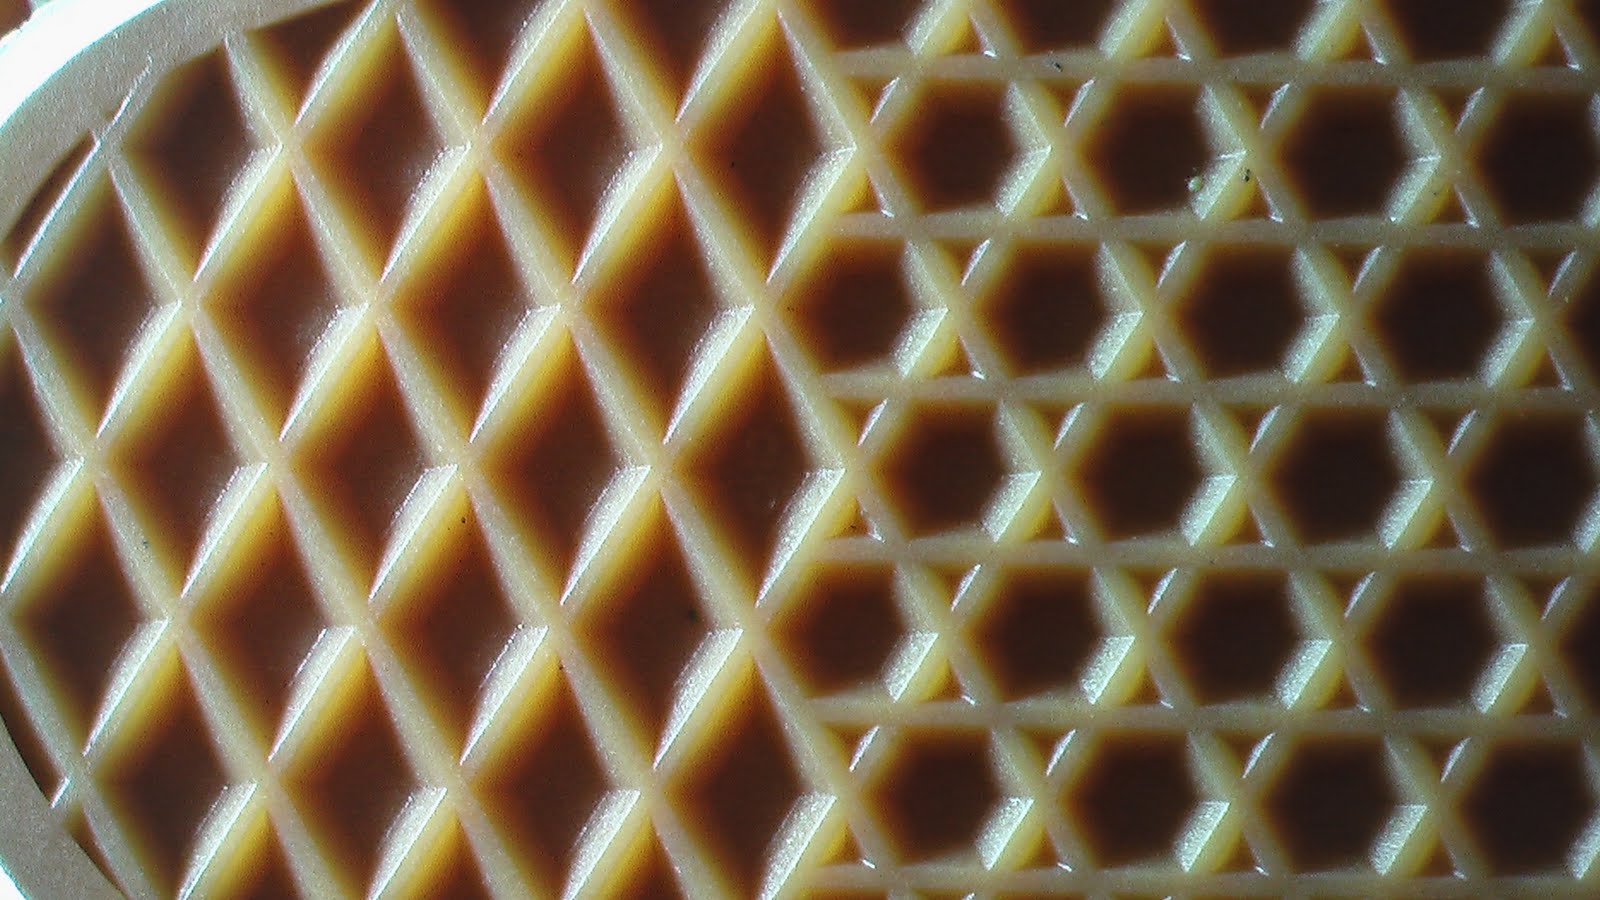 vans waffle sole